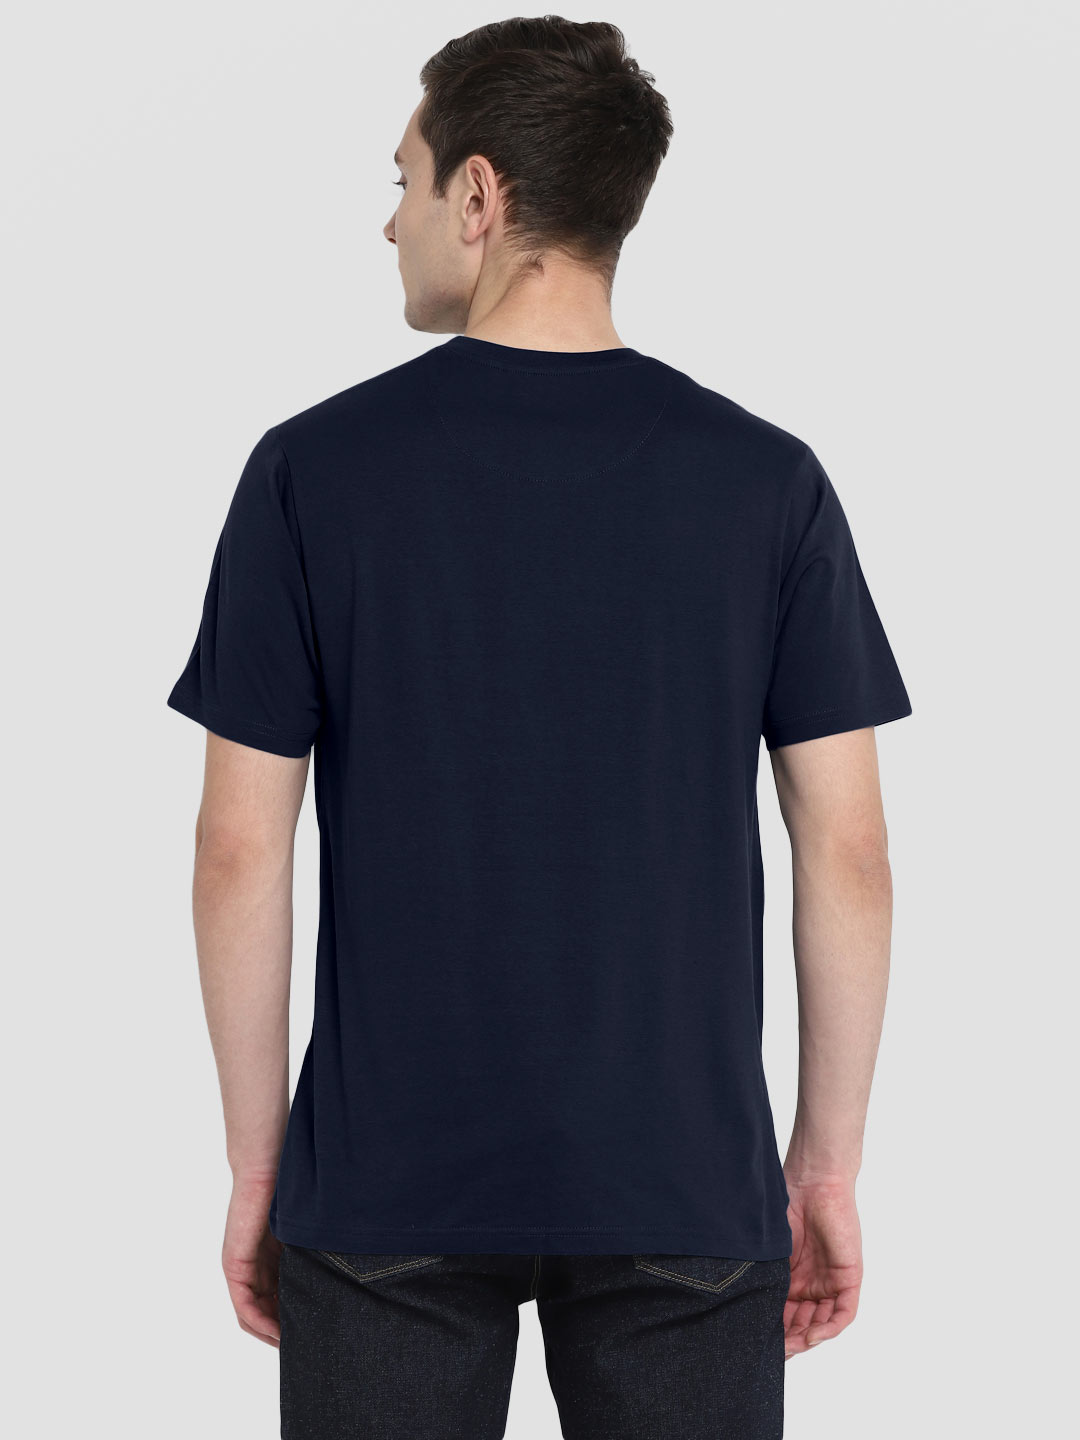 Supima Cotton V Neck T-Shirt for Men - Navy Blue